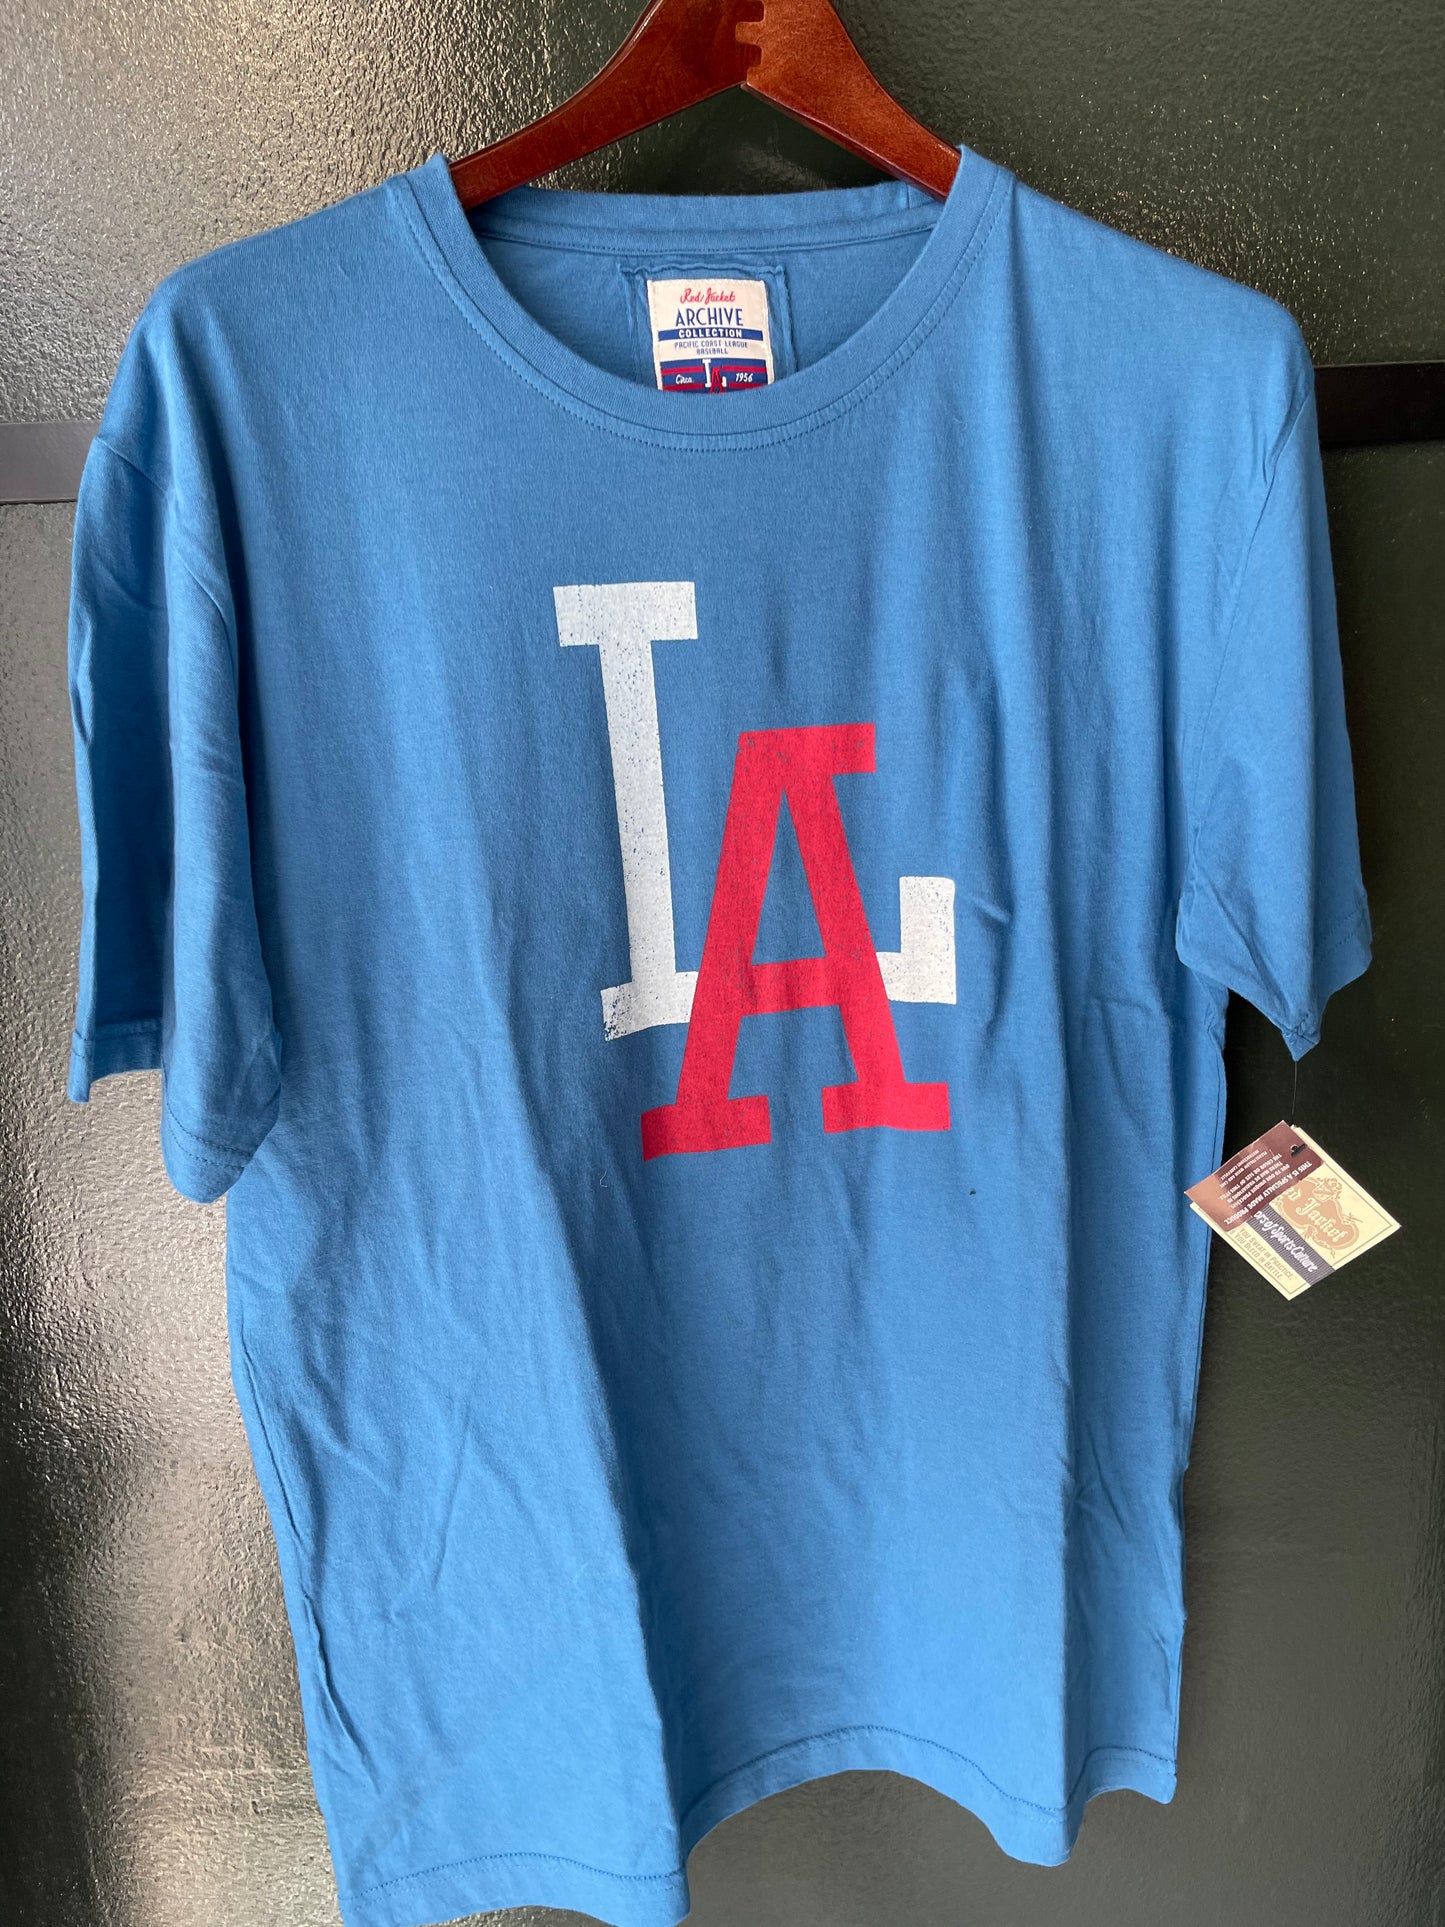 Los Angeles Angels Brass Tack t-shirt